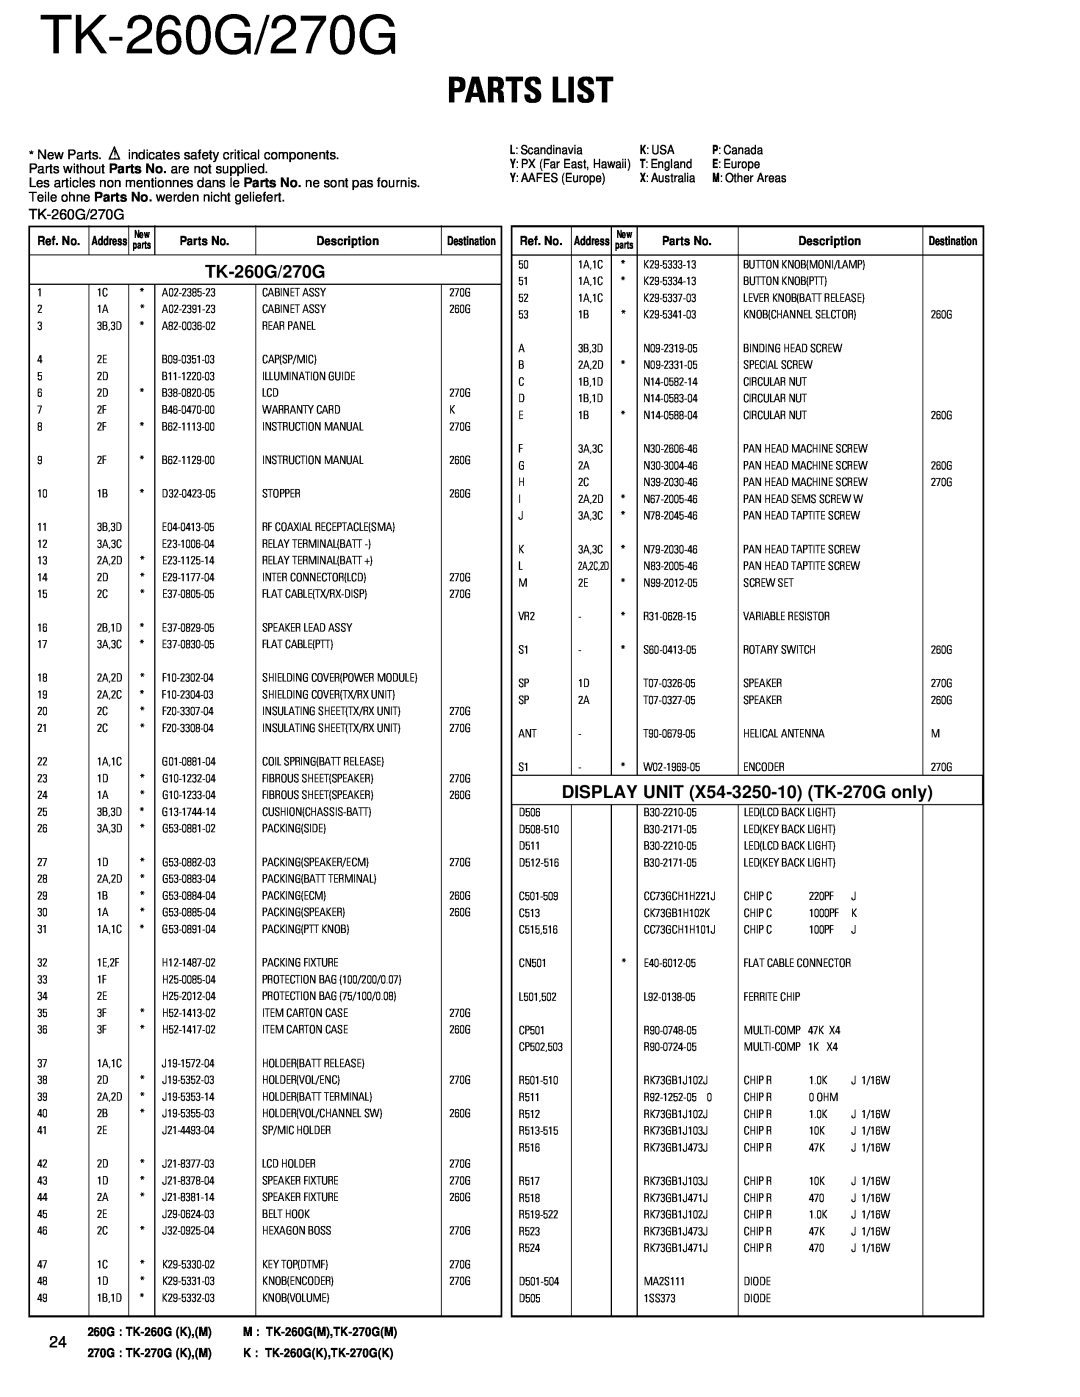 Kenwood service manual Parts List, TK-260G/270G, DISPLAY UNIT X54-3250-10 TK-270Gonly 